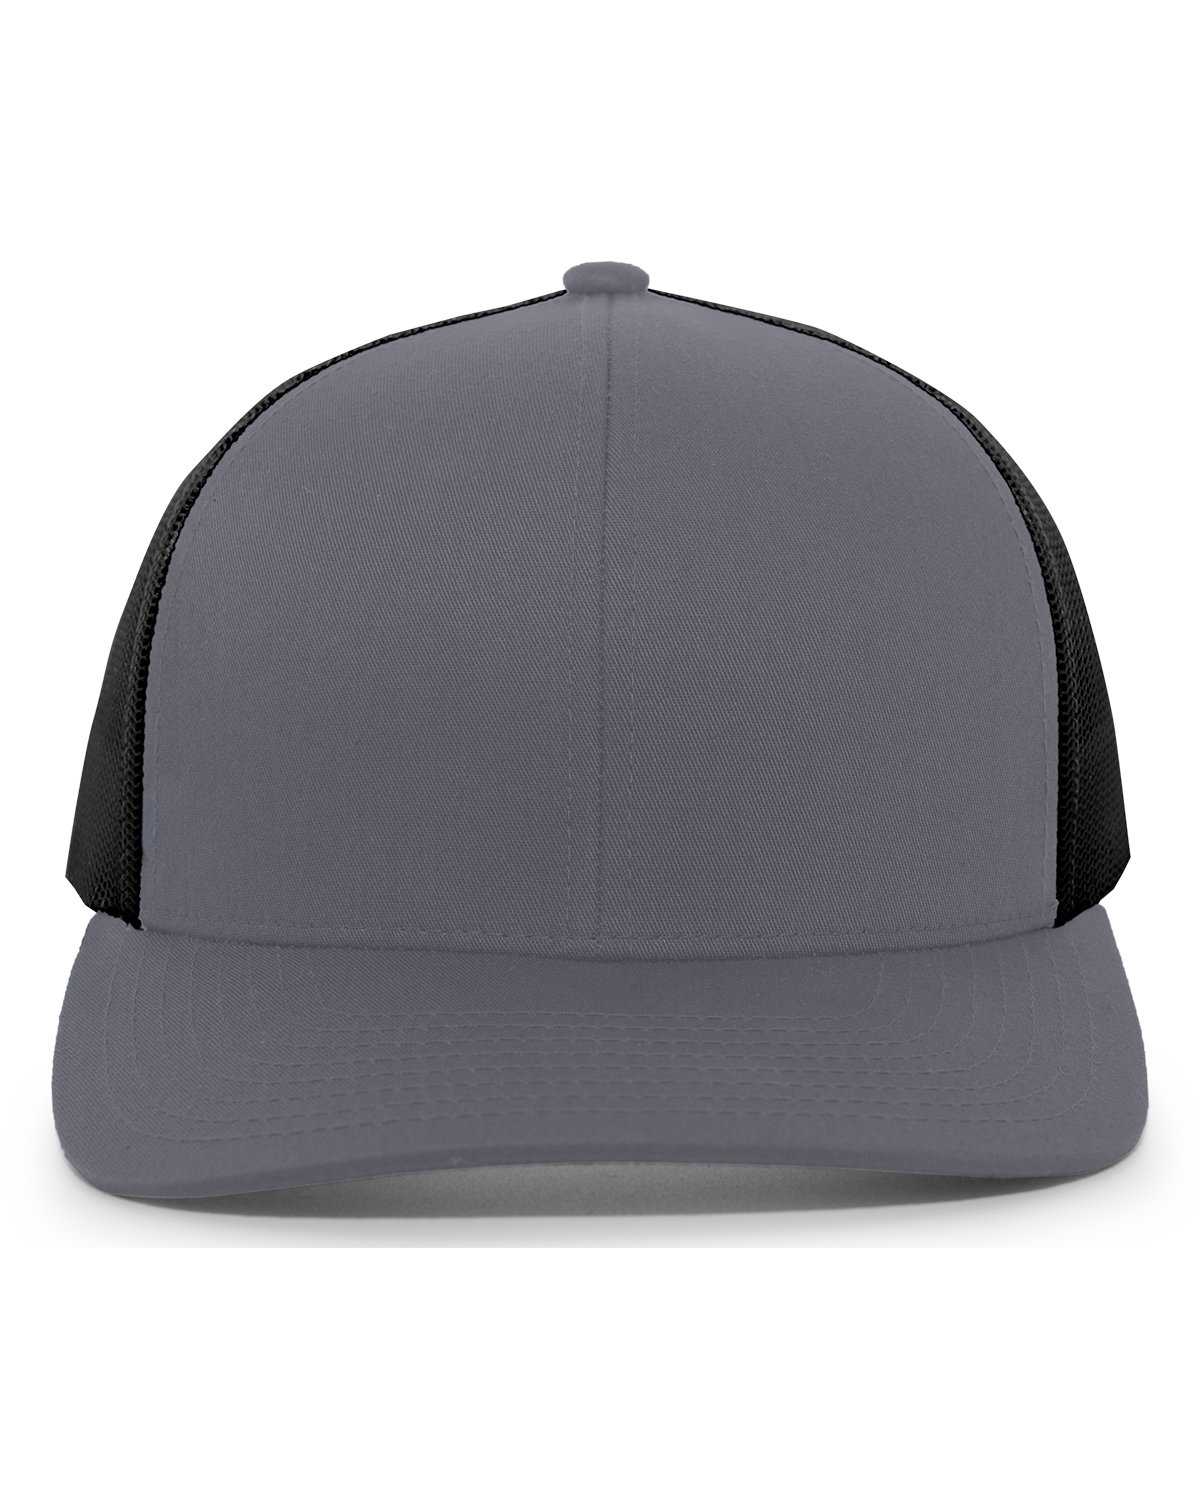 Pacific Headwear Trucker Snapback Hat GRAPHITE/ BLACK 